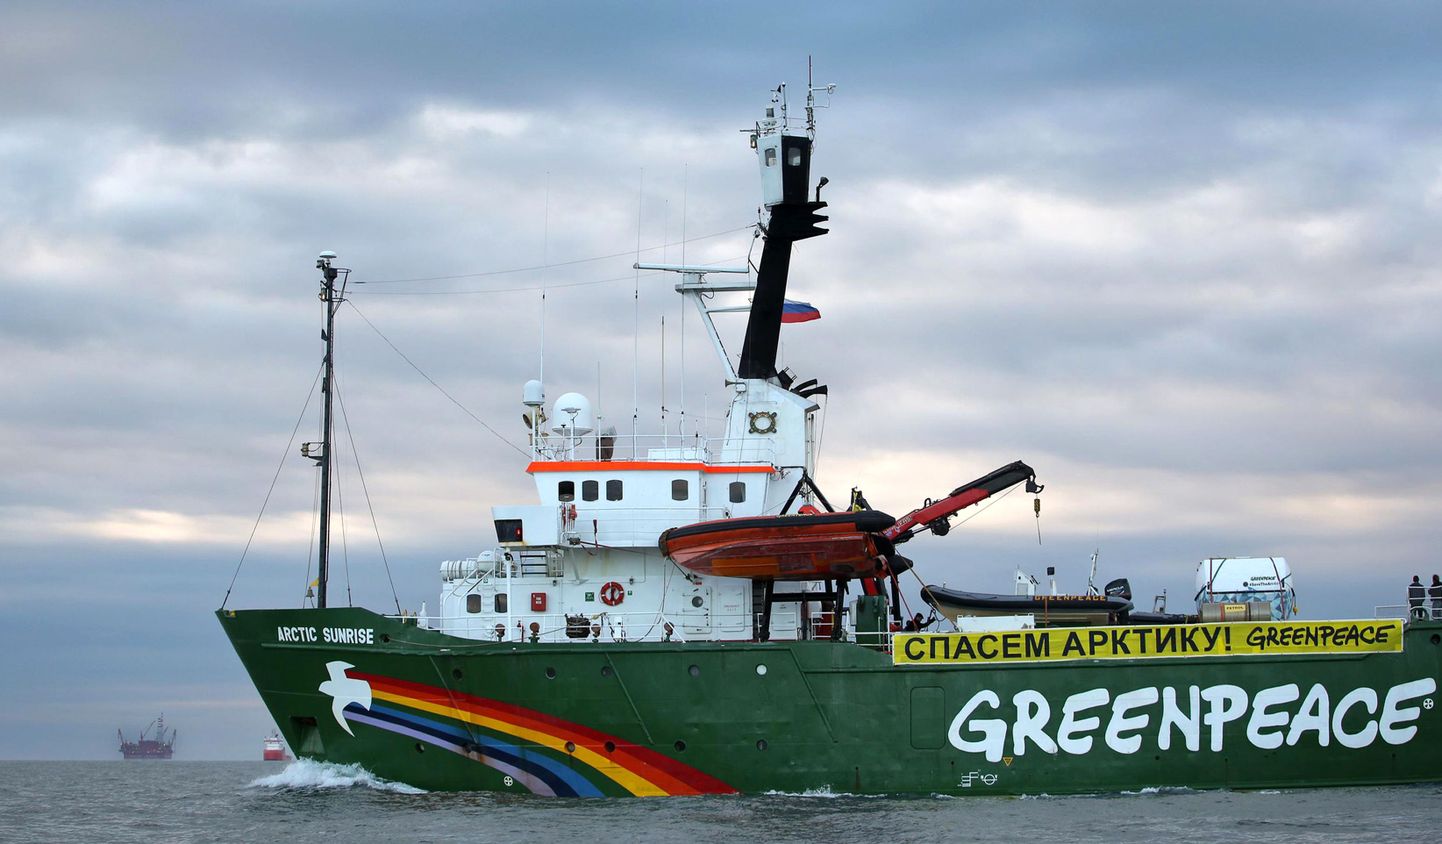 Greenpeace'i laev.